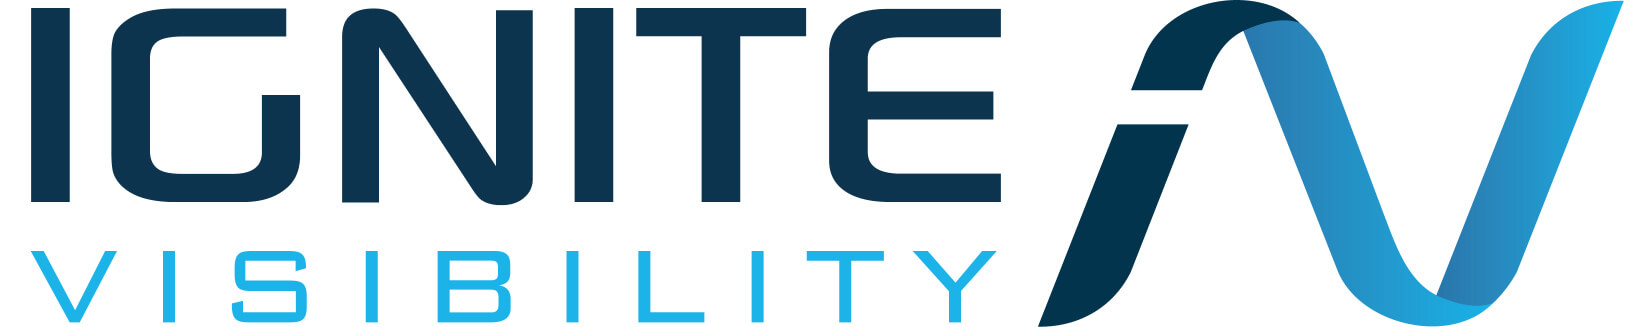 Top ORM Company Logo: Ignite Visibility